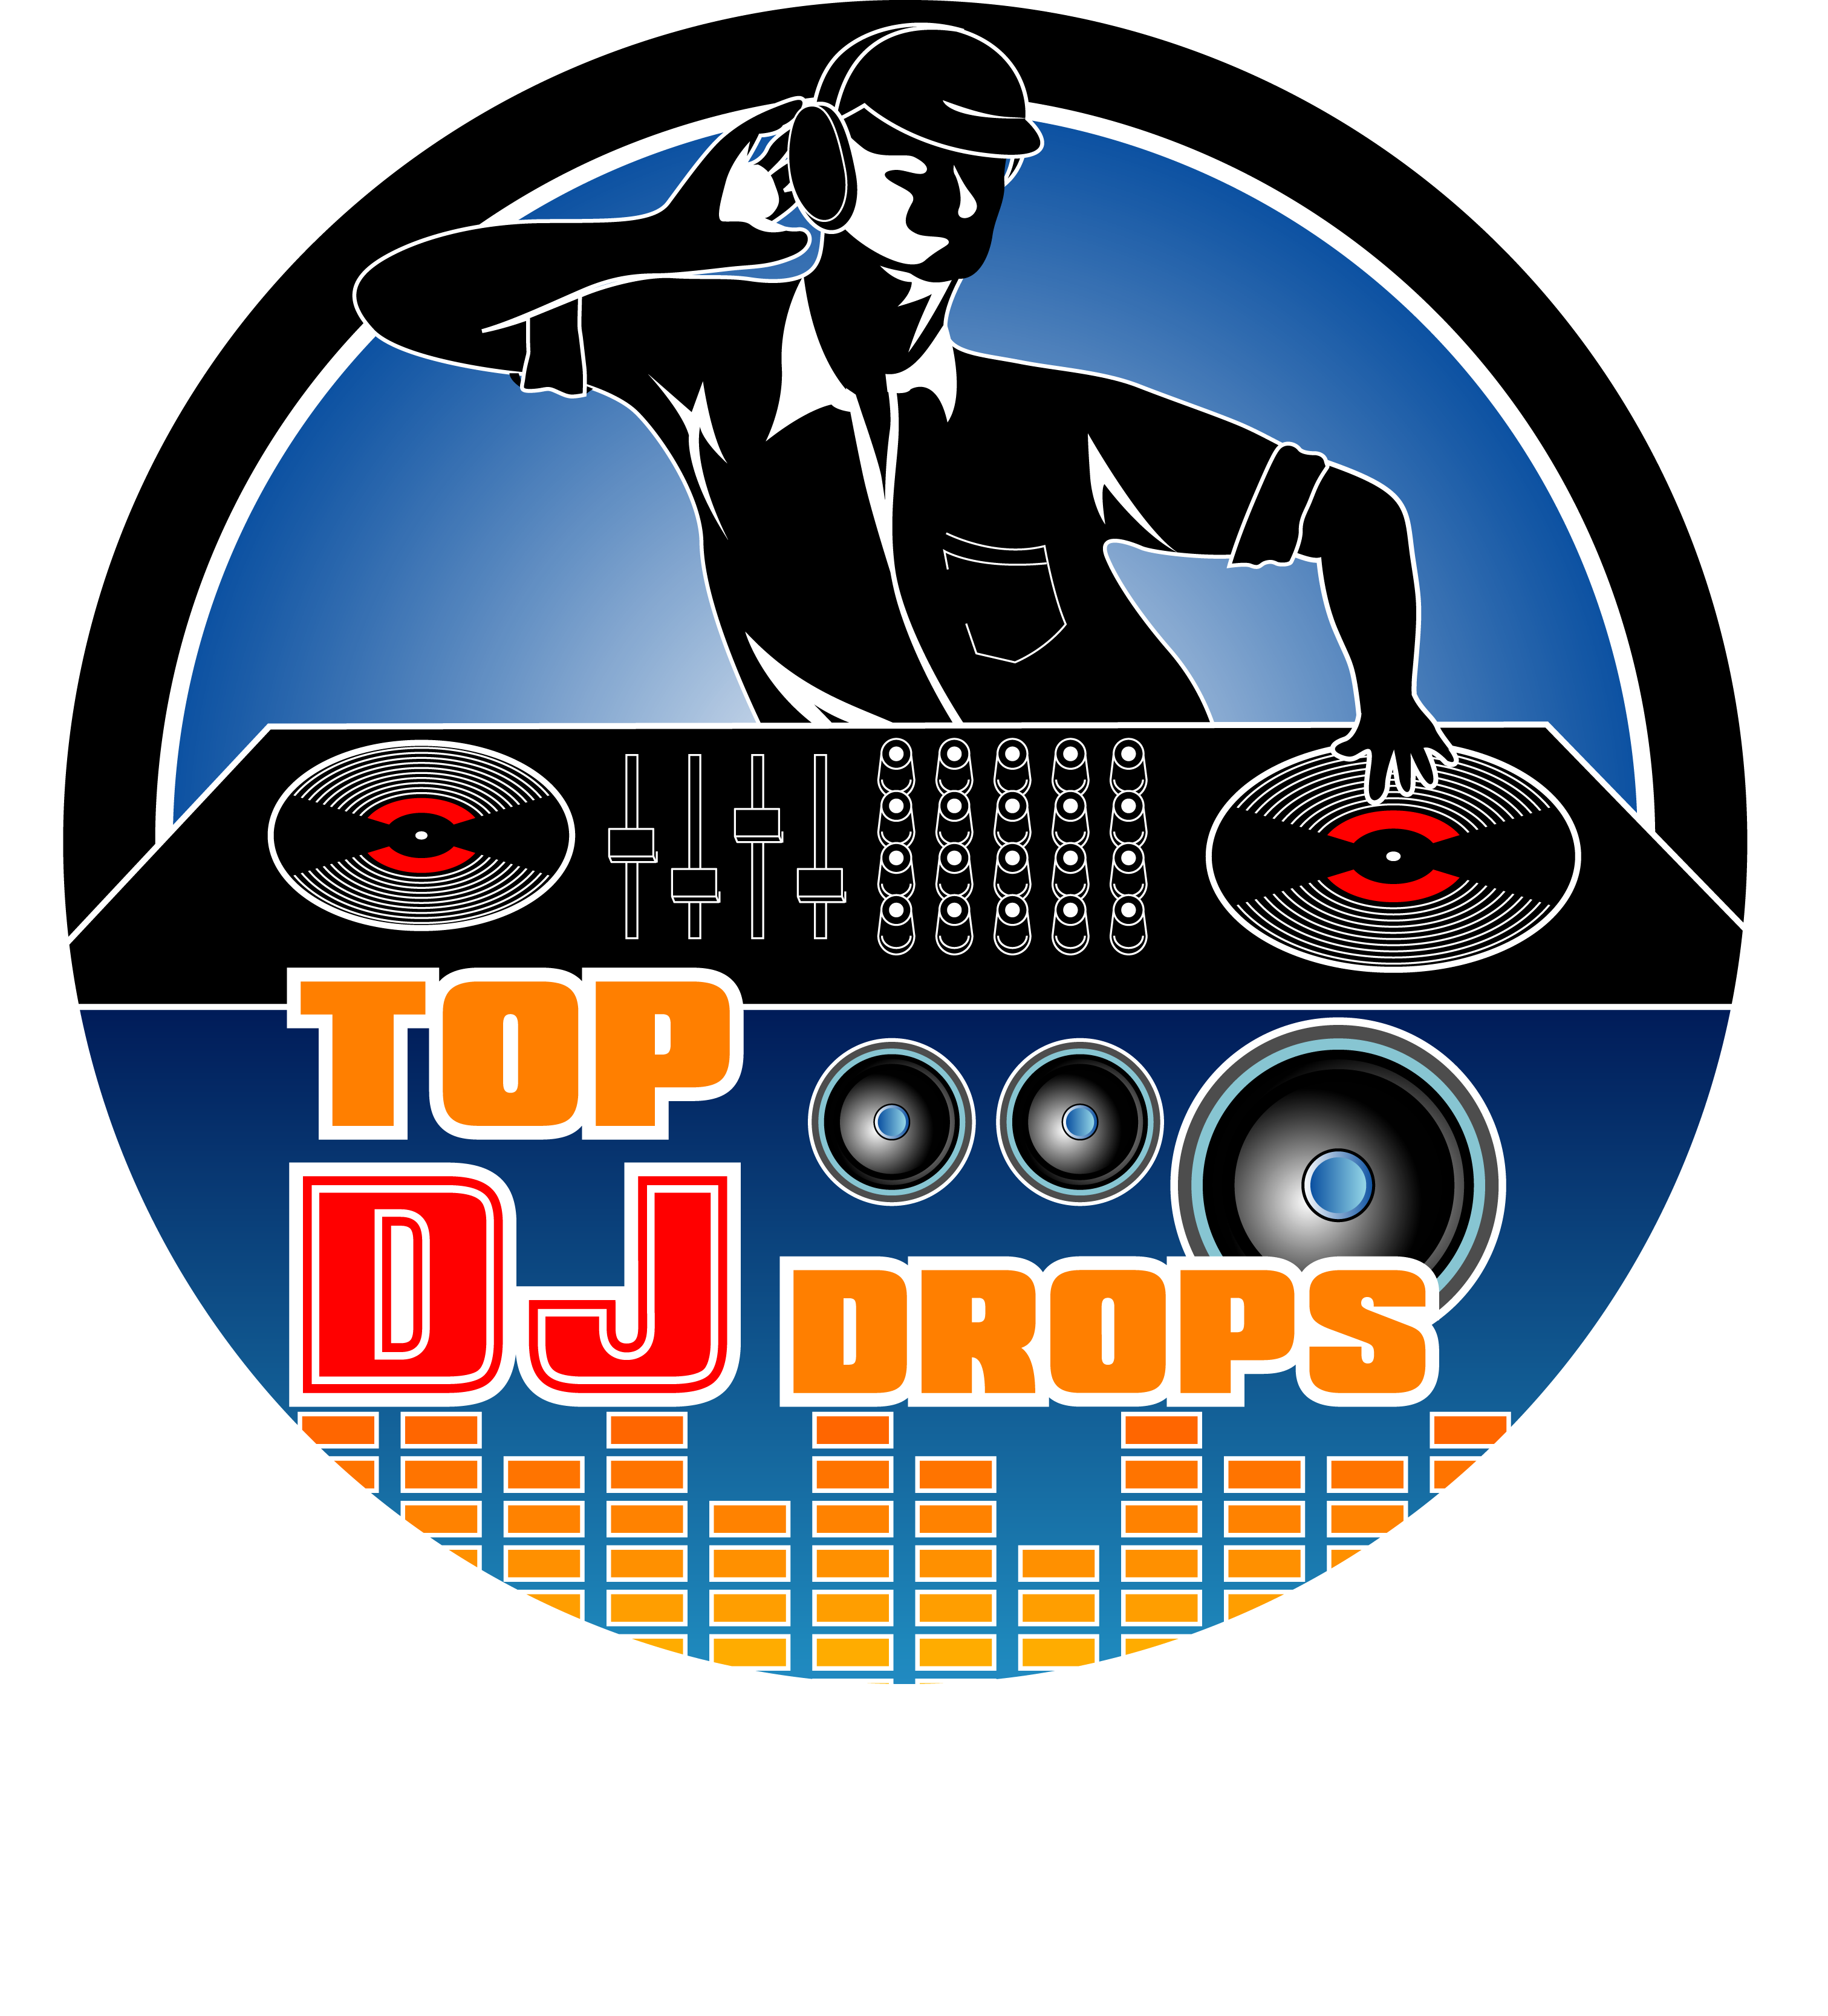 Fully Custom Dry Radio and DJ Drops - Female Voice - DJ Drops 24/7